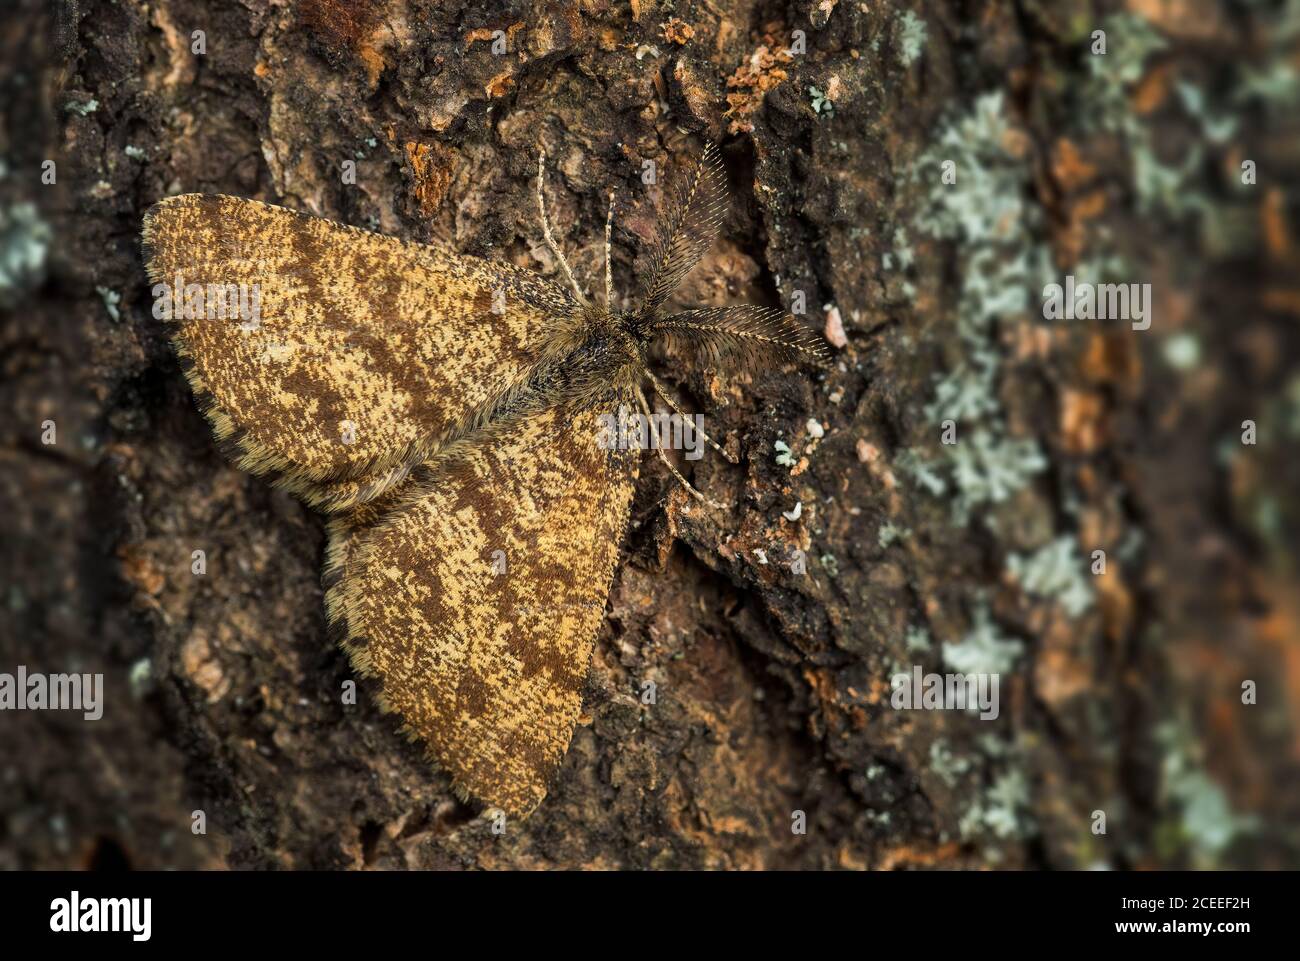 Common Heath moth - Ematurga atomaria, common brown moth from European meadows and grasslands, Zlin, Czech Republic. Stock Photo